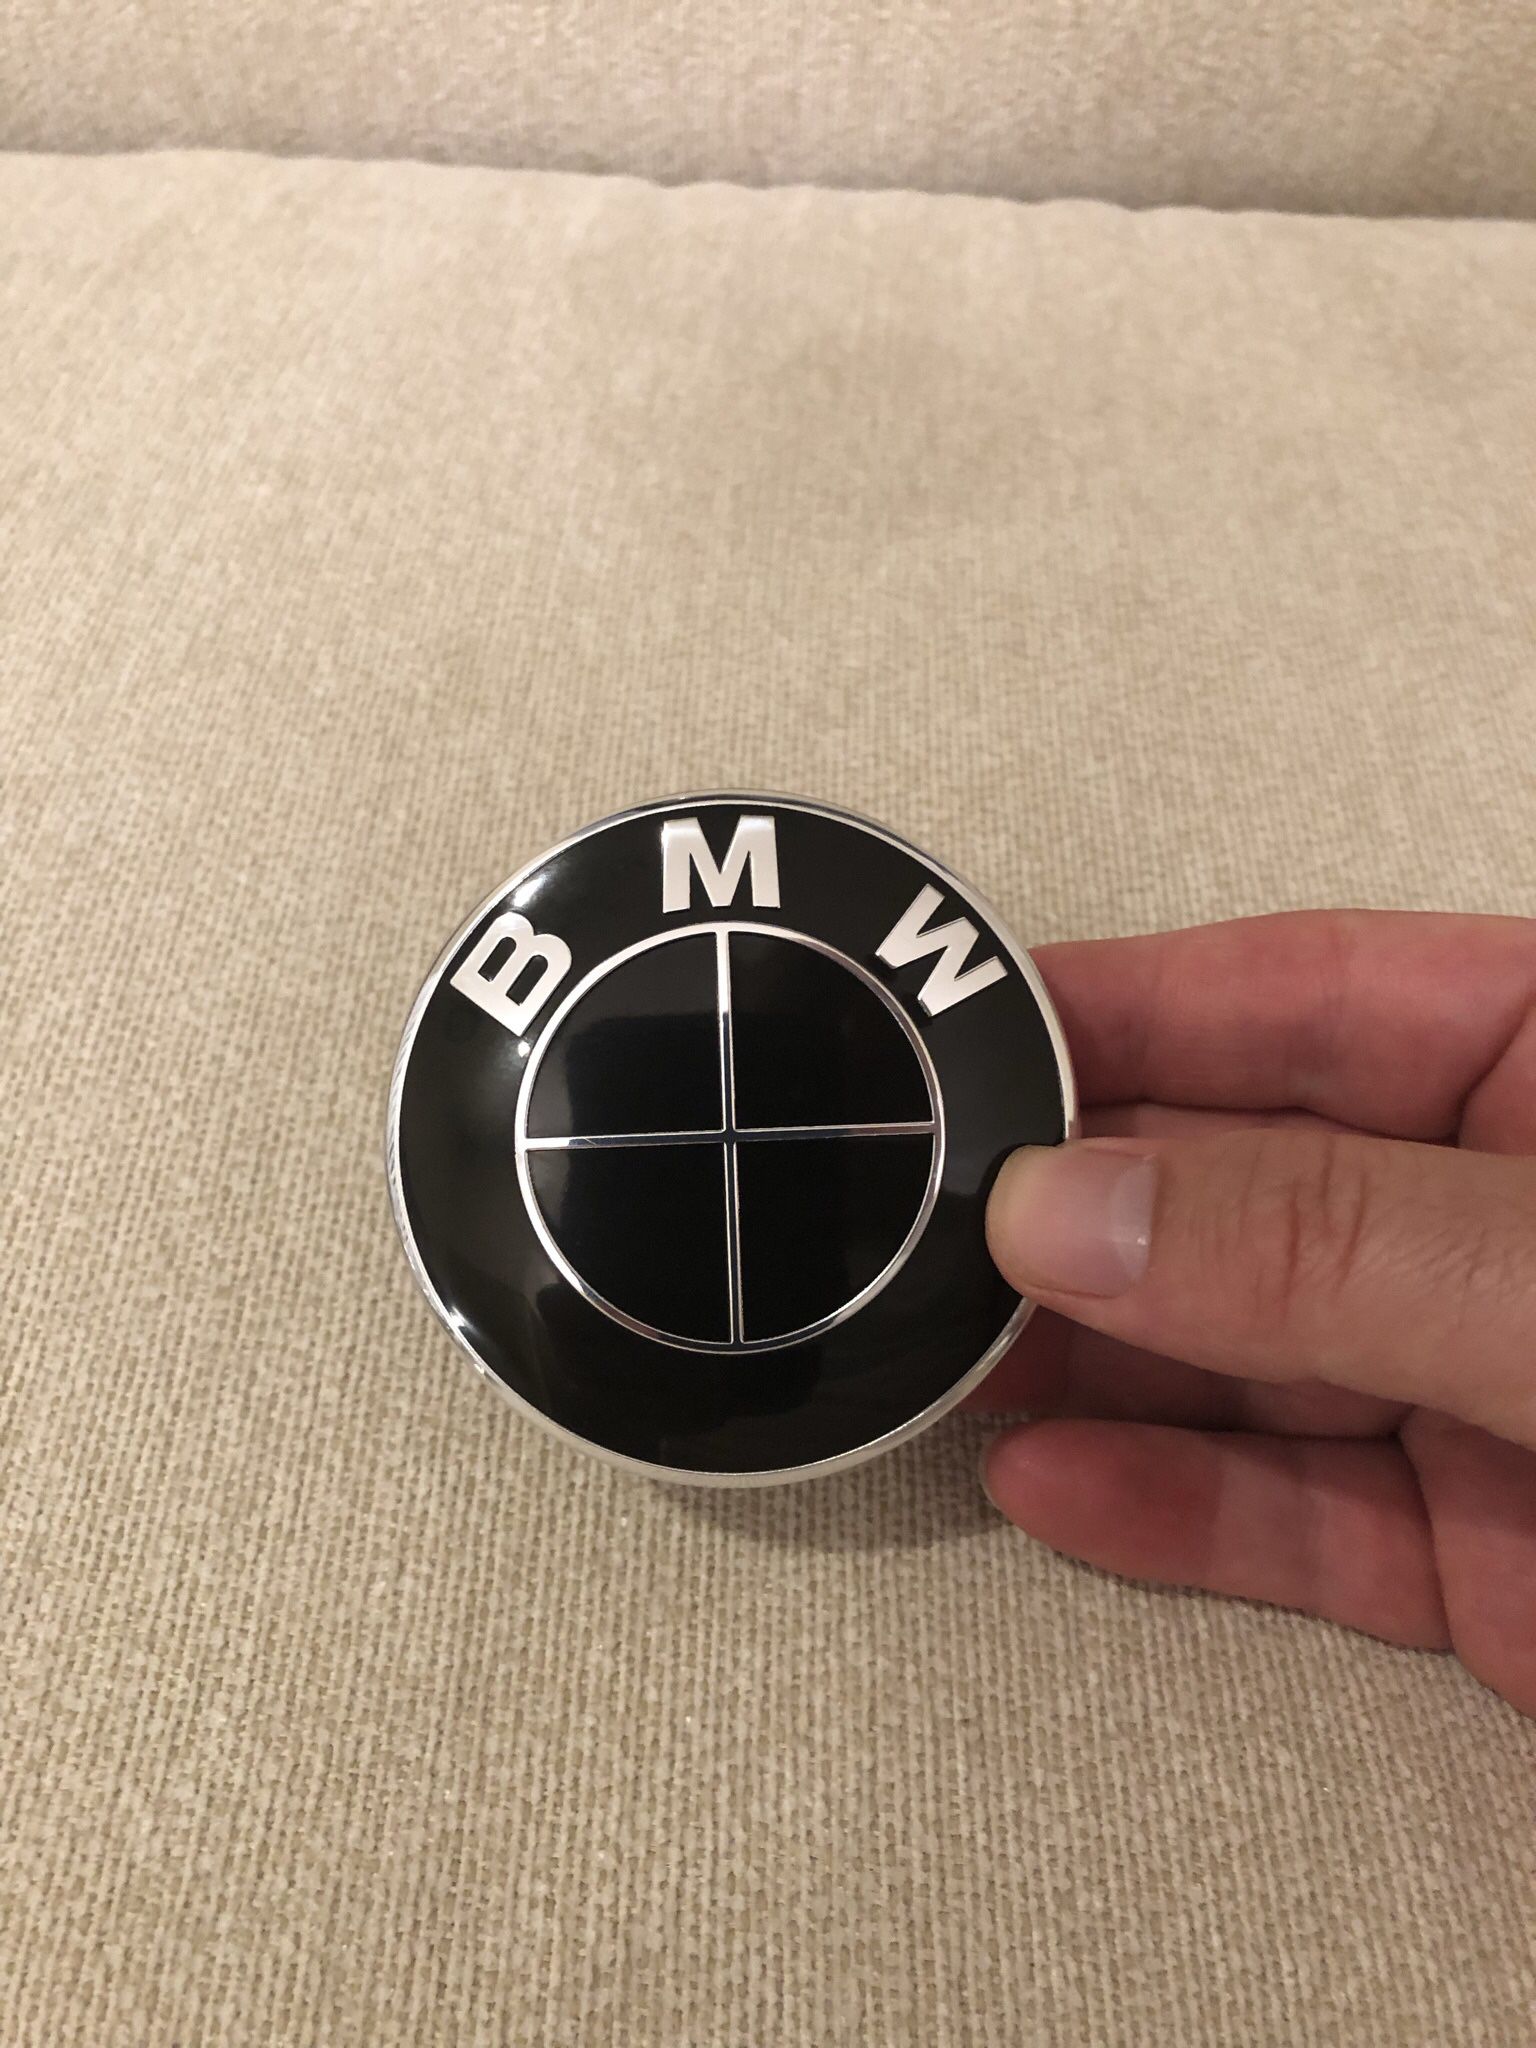 Wheel Center Caps Fits BMW Rims 68mm